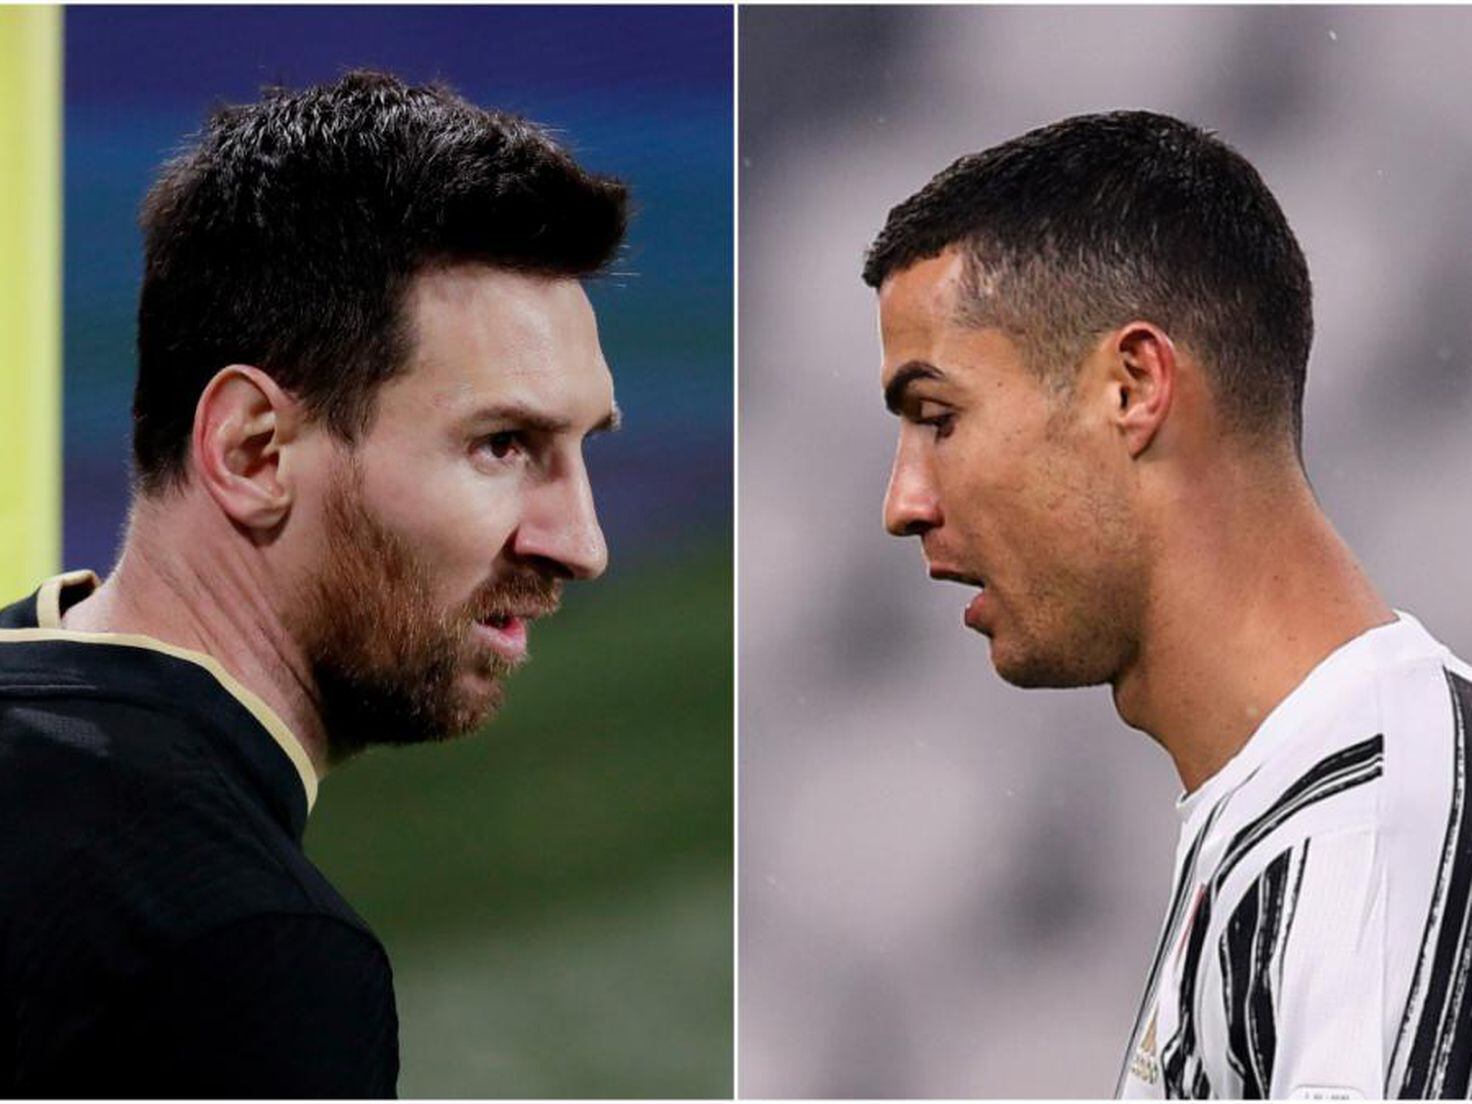 Messi vs Ronaldo - Five head-to-head facts ahead of potential final showdown